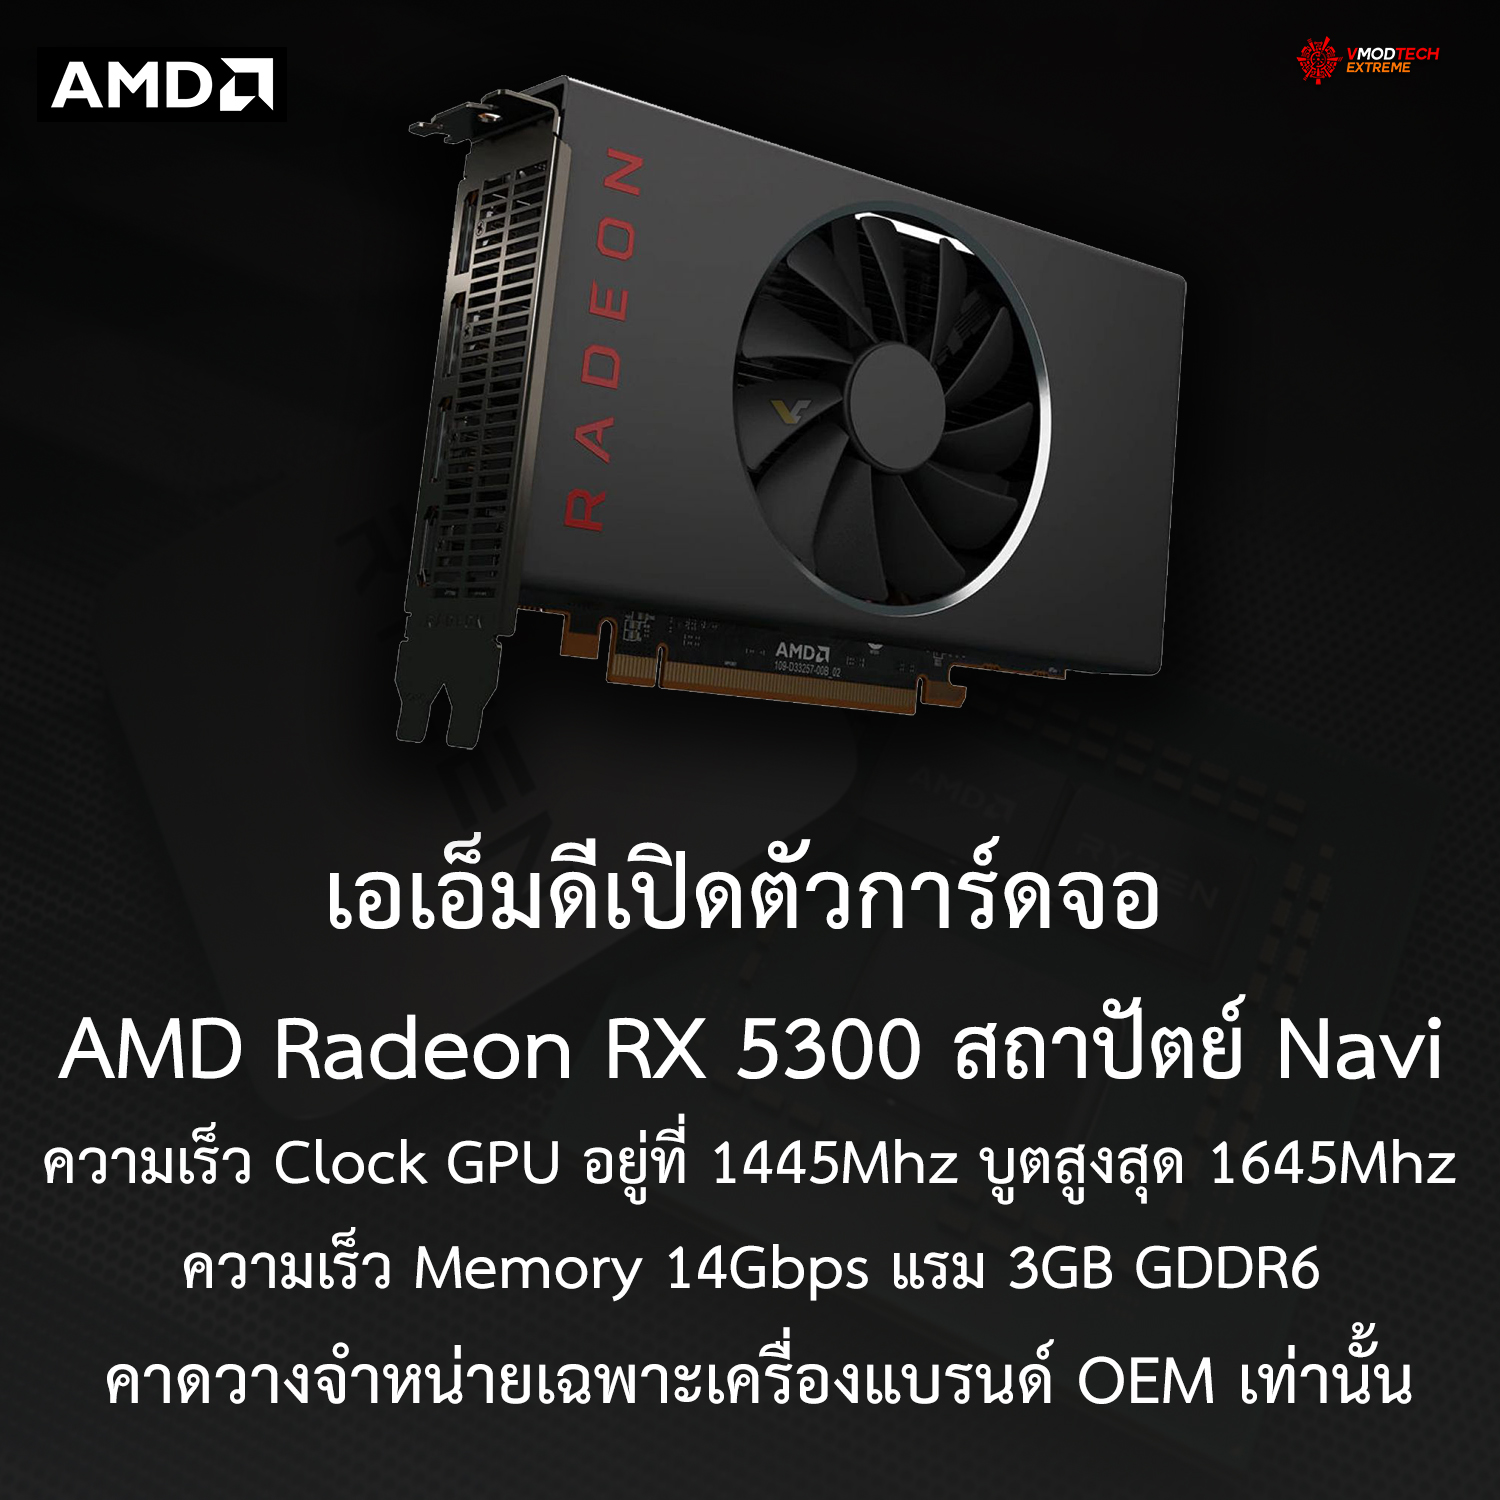 amd radeon rx 5300 เอเอ็มดีเปิดตัวการ์ดจอ AMD Radeon RX 5300 สถาปัตย์ Navi มาพร้อมแรม 3GB GDDR6 คาดใช้งานเฉพาะเครื่องแบรนด์ OEM เท่านั้น